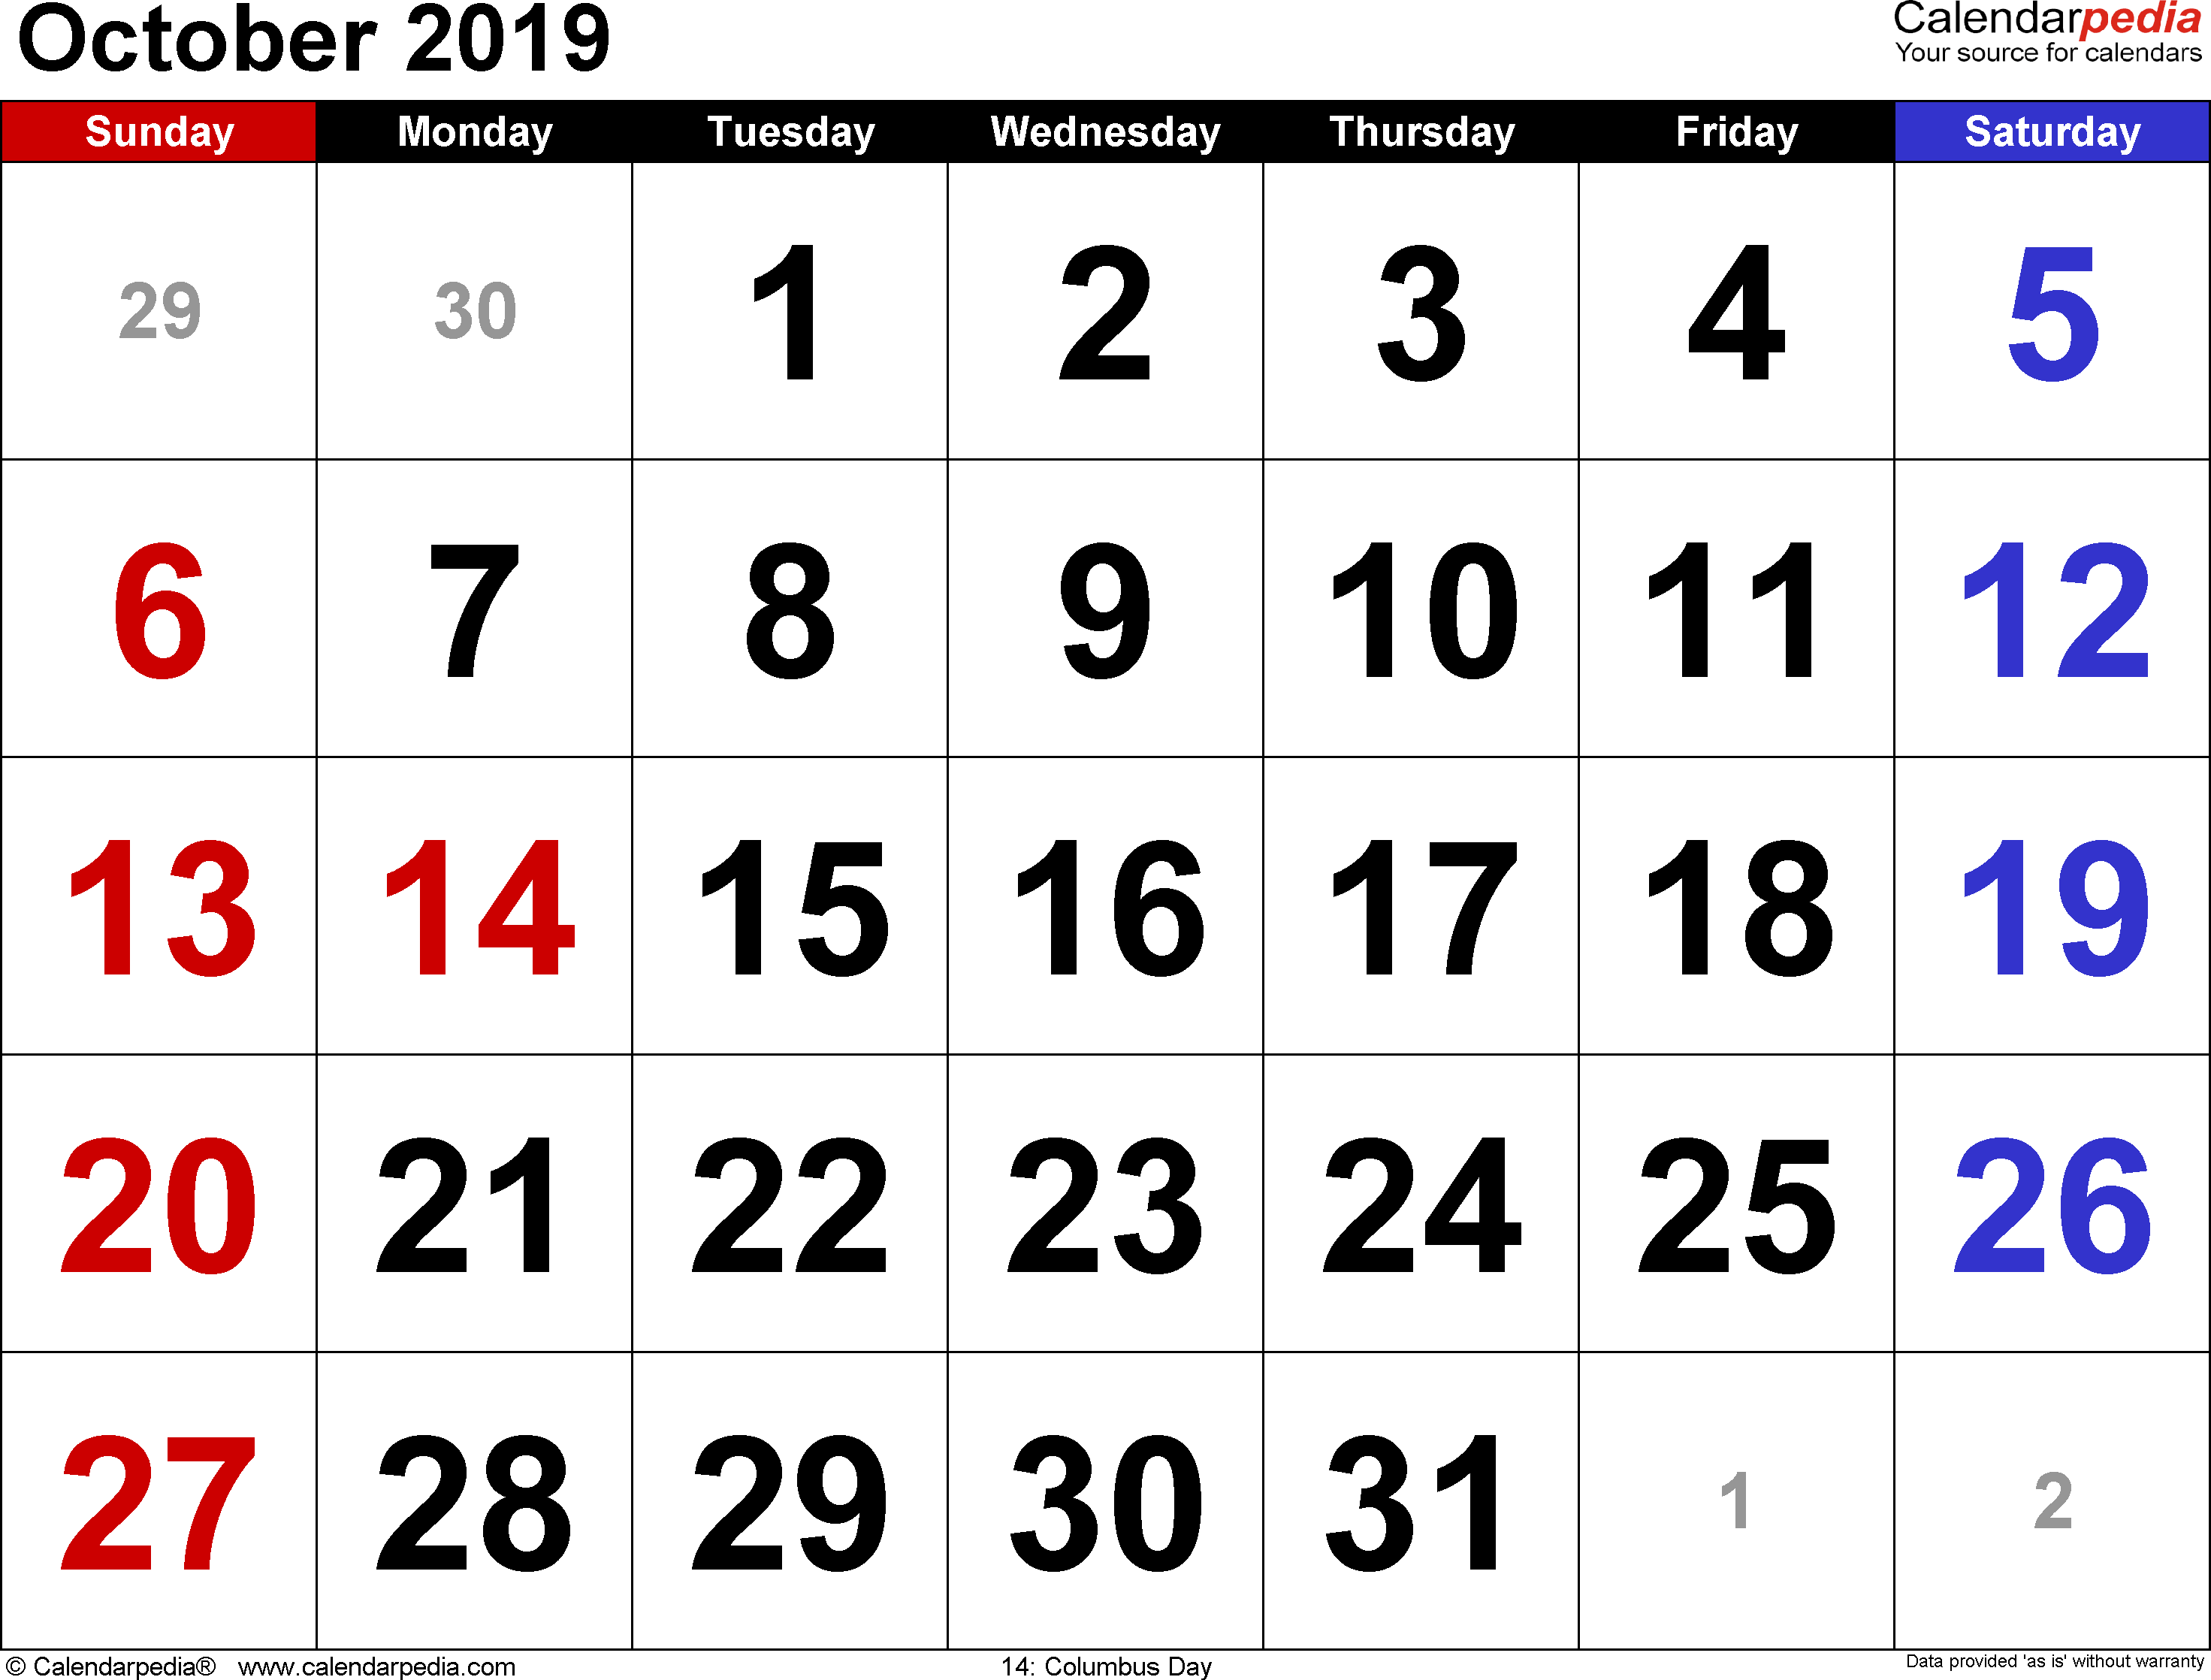 October 2019 Calendars for Word, Excel & PDF